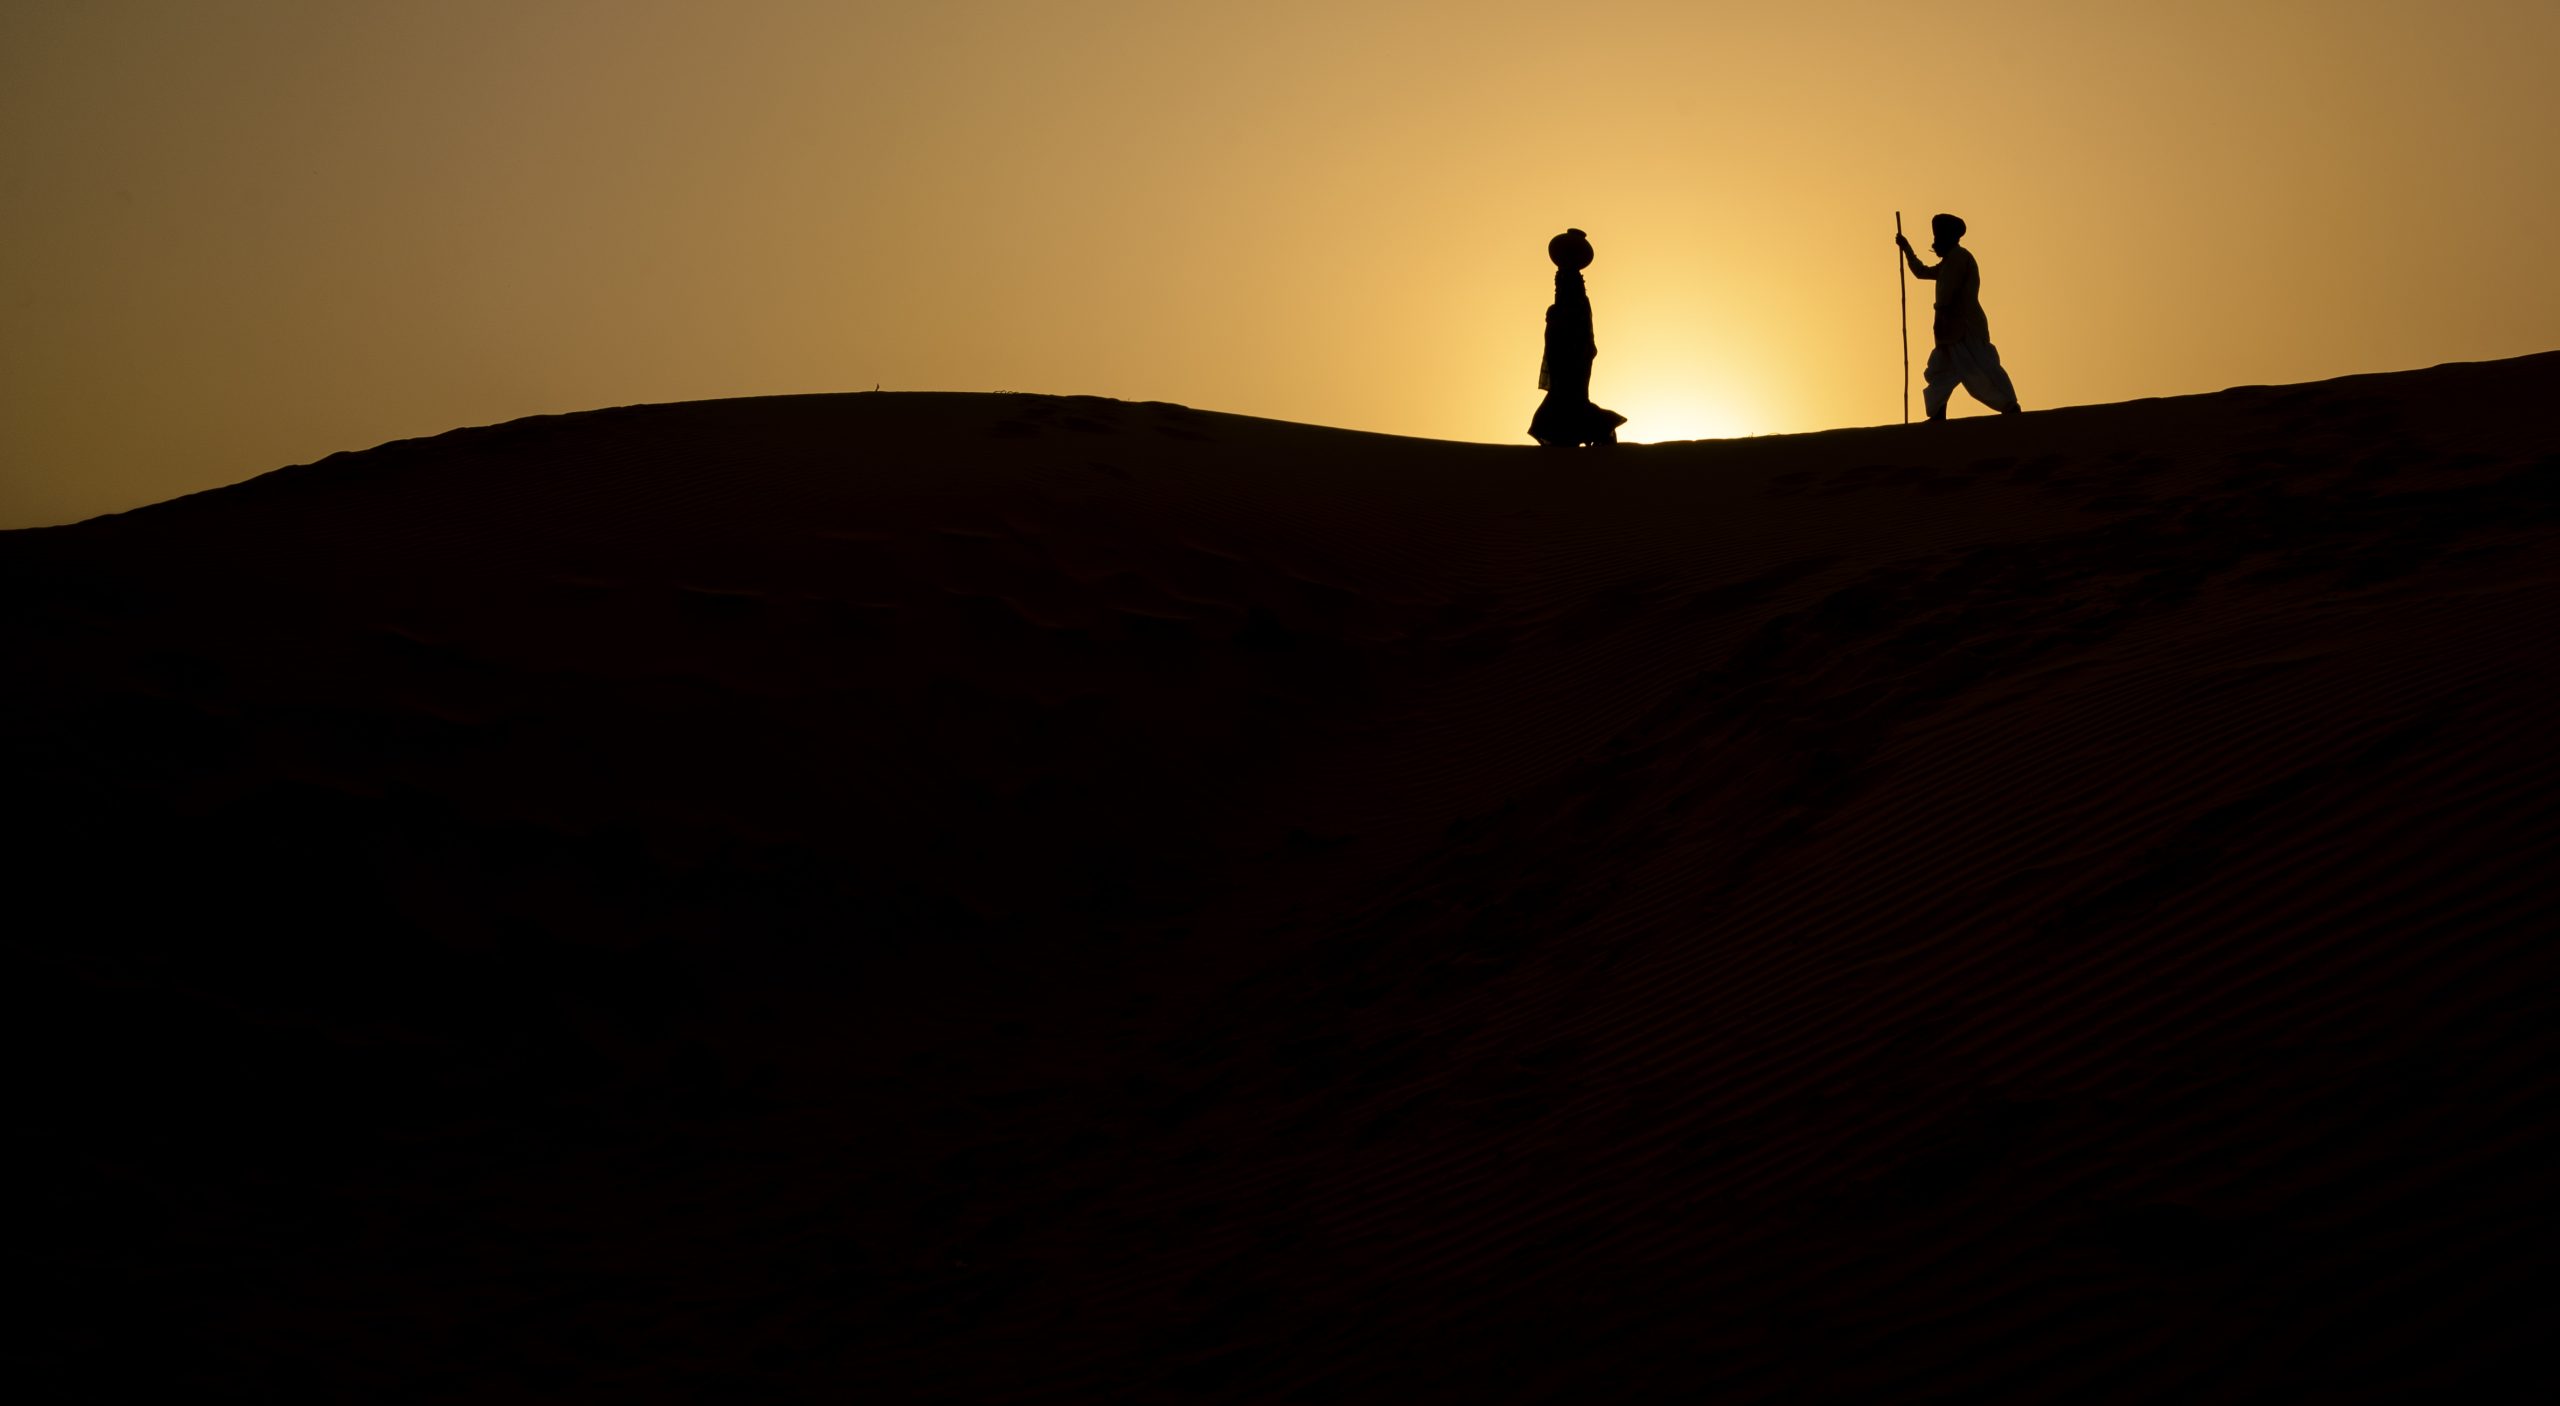 Two men walking in the desert.